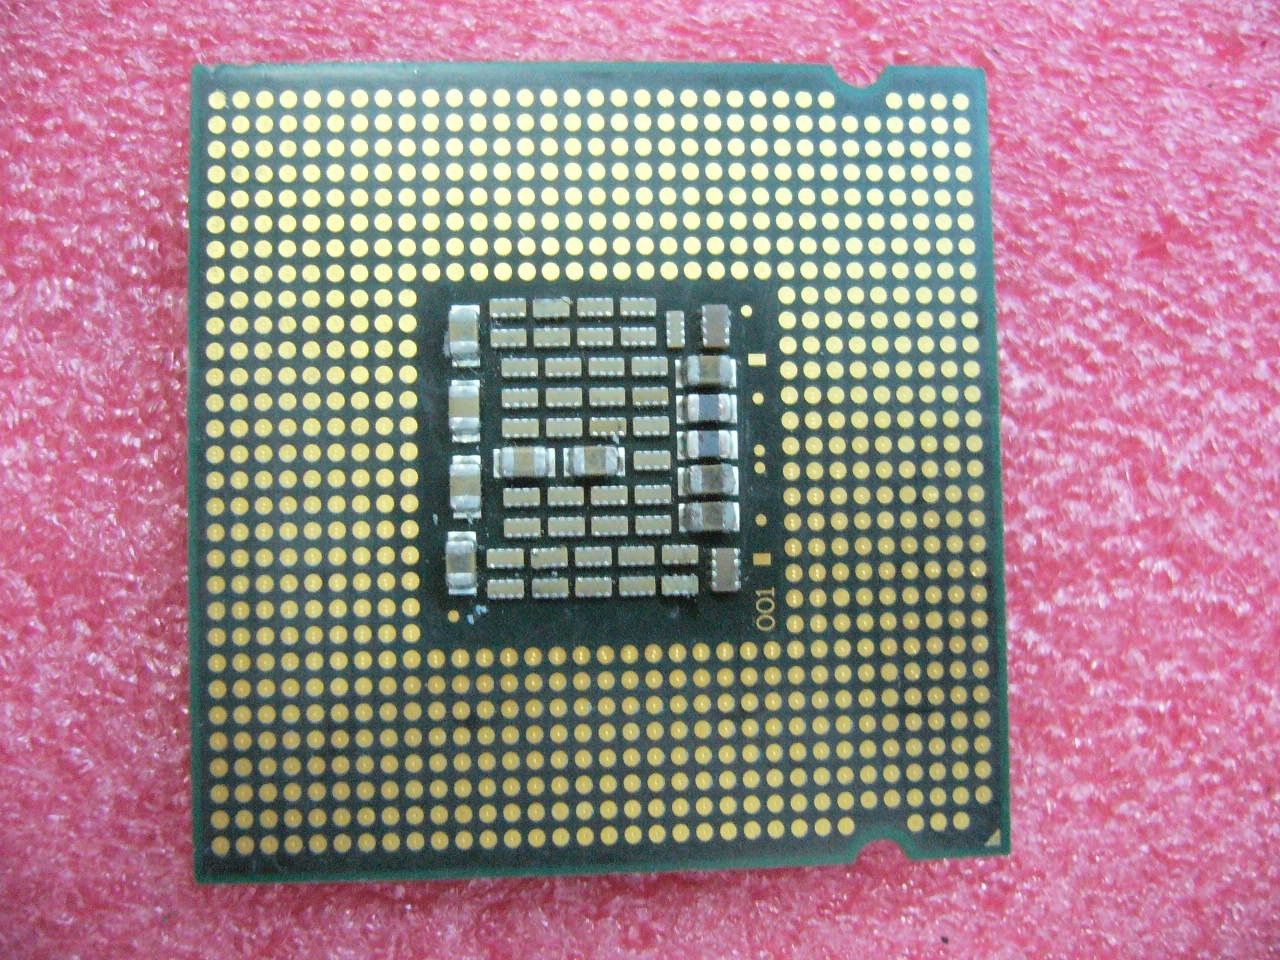 INTEL Pentium D 945 CPU 3.4GHz 4MB/800Mhz LGA775 SL9QQ SL9QB - Click Image to Close